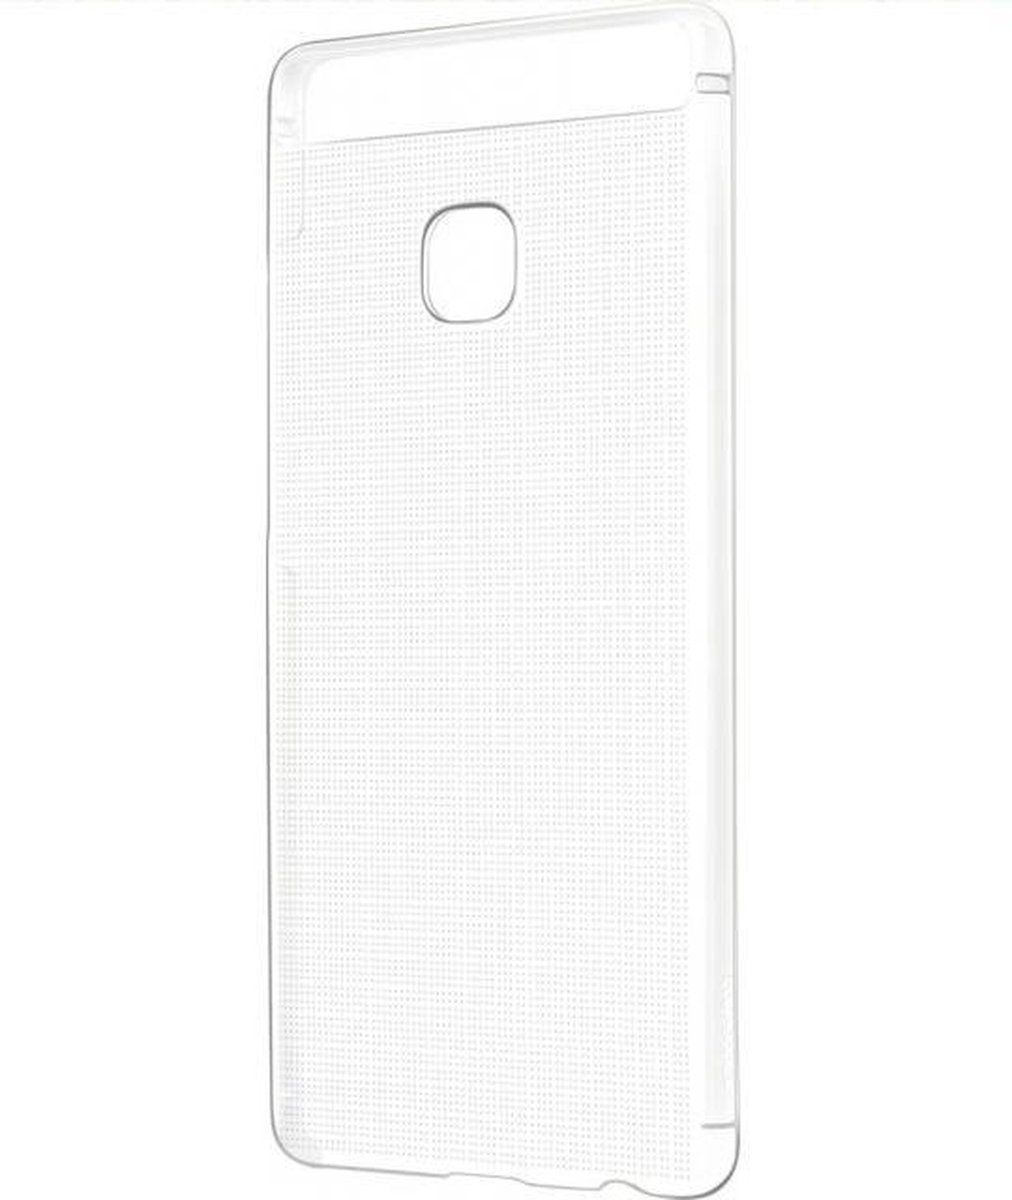 Origineel Huawei Hard BackCover voor Huawei P9 Plus - Transparent